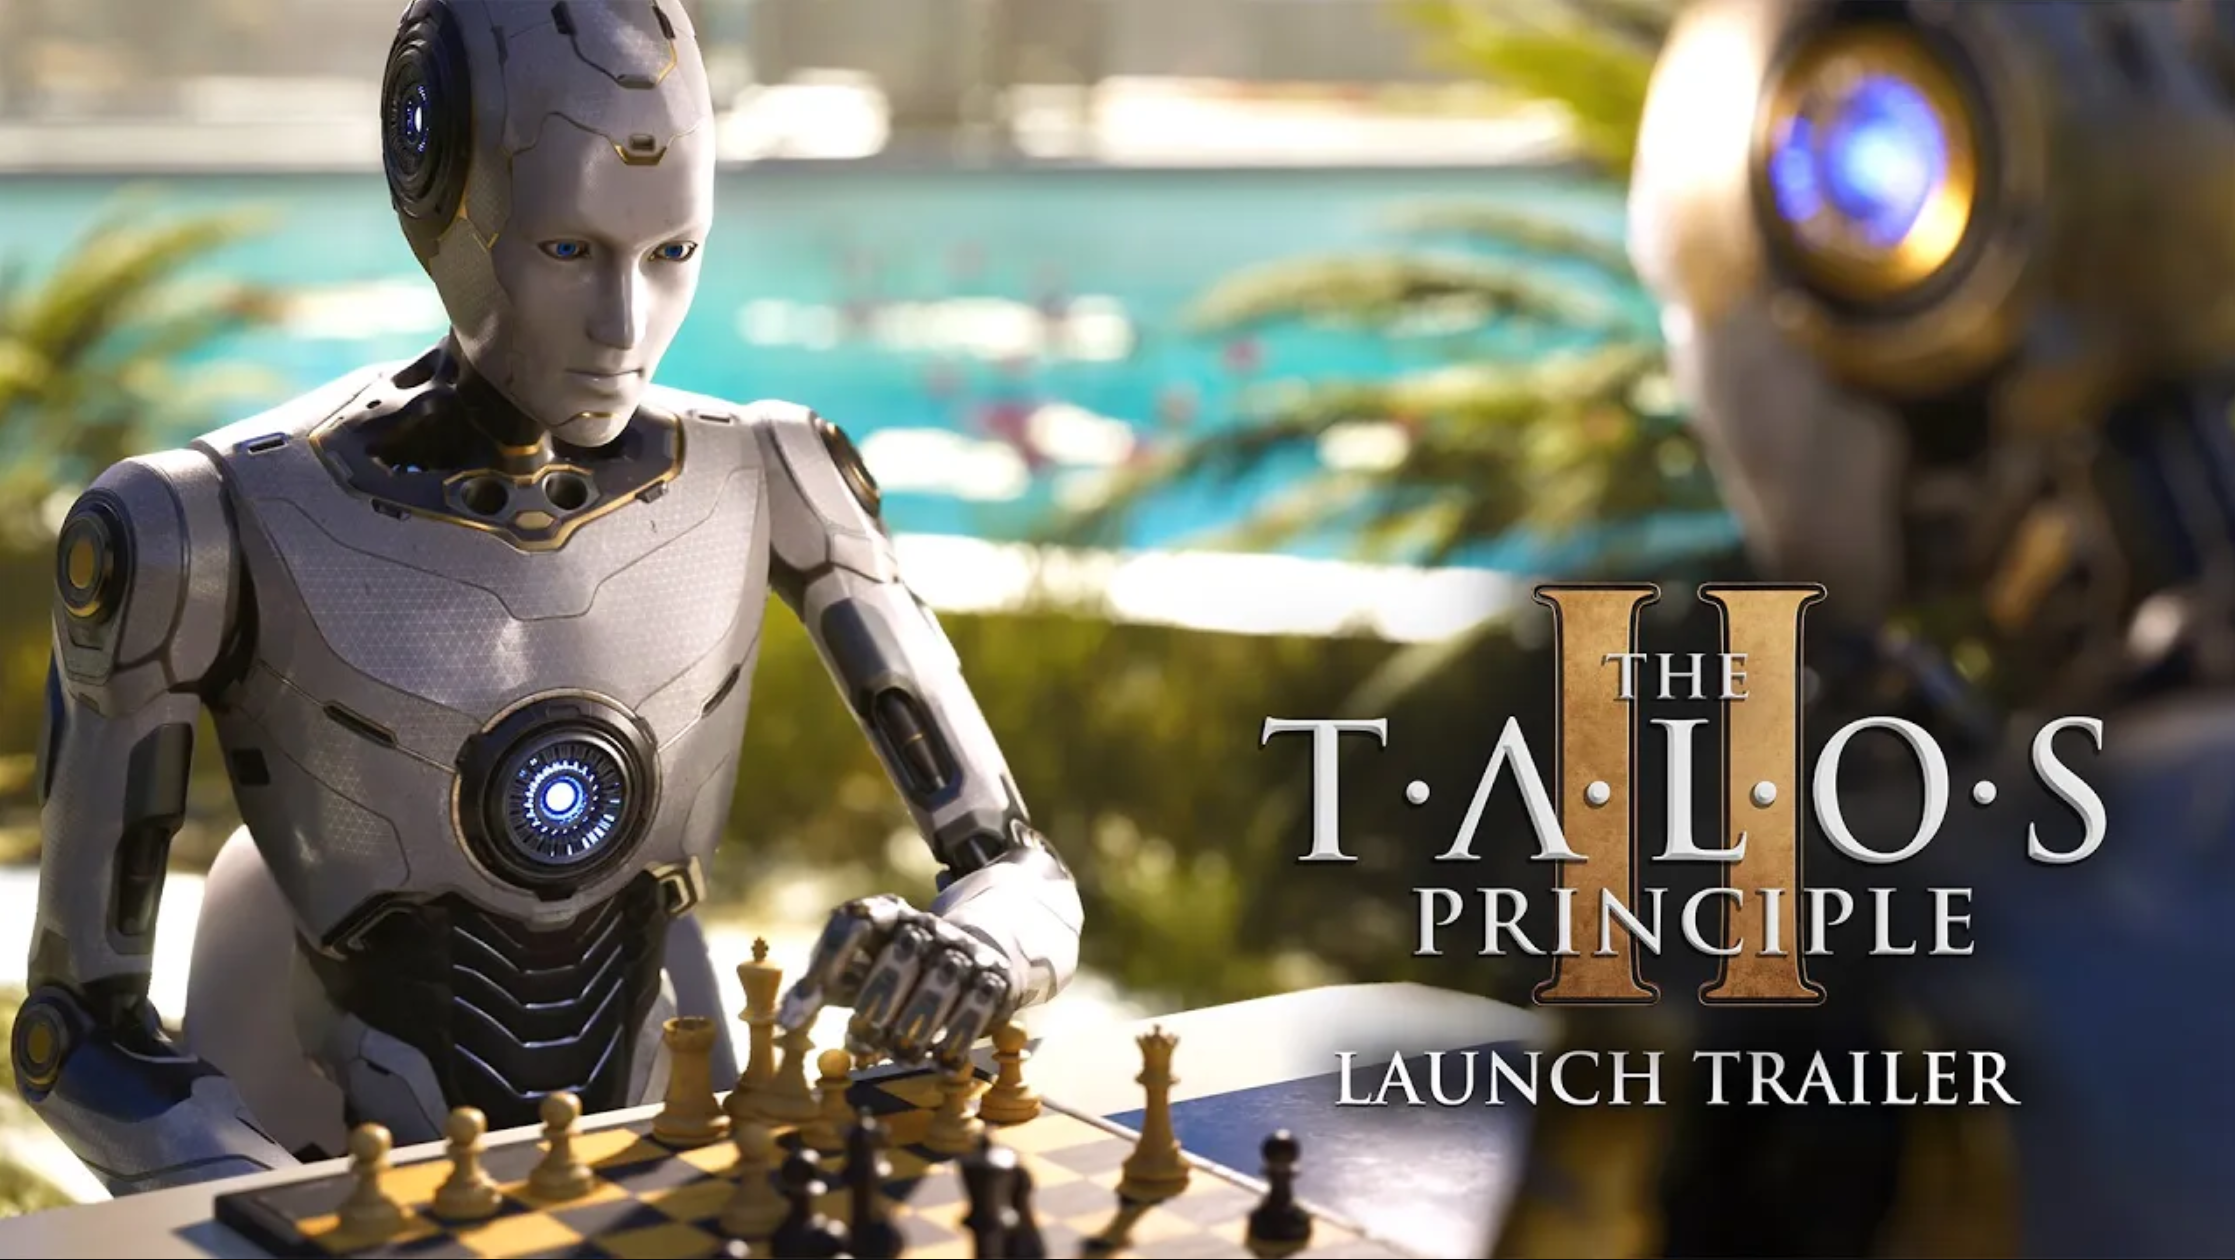 The Talos Principle Launch Trailer